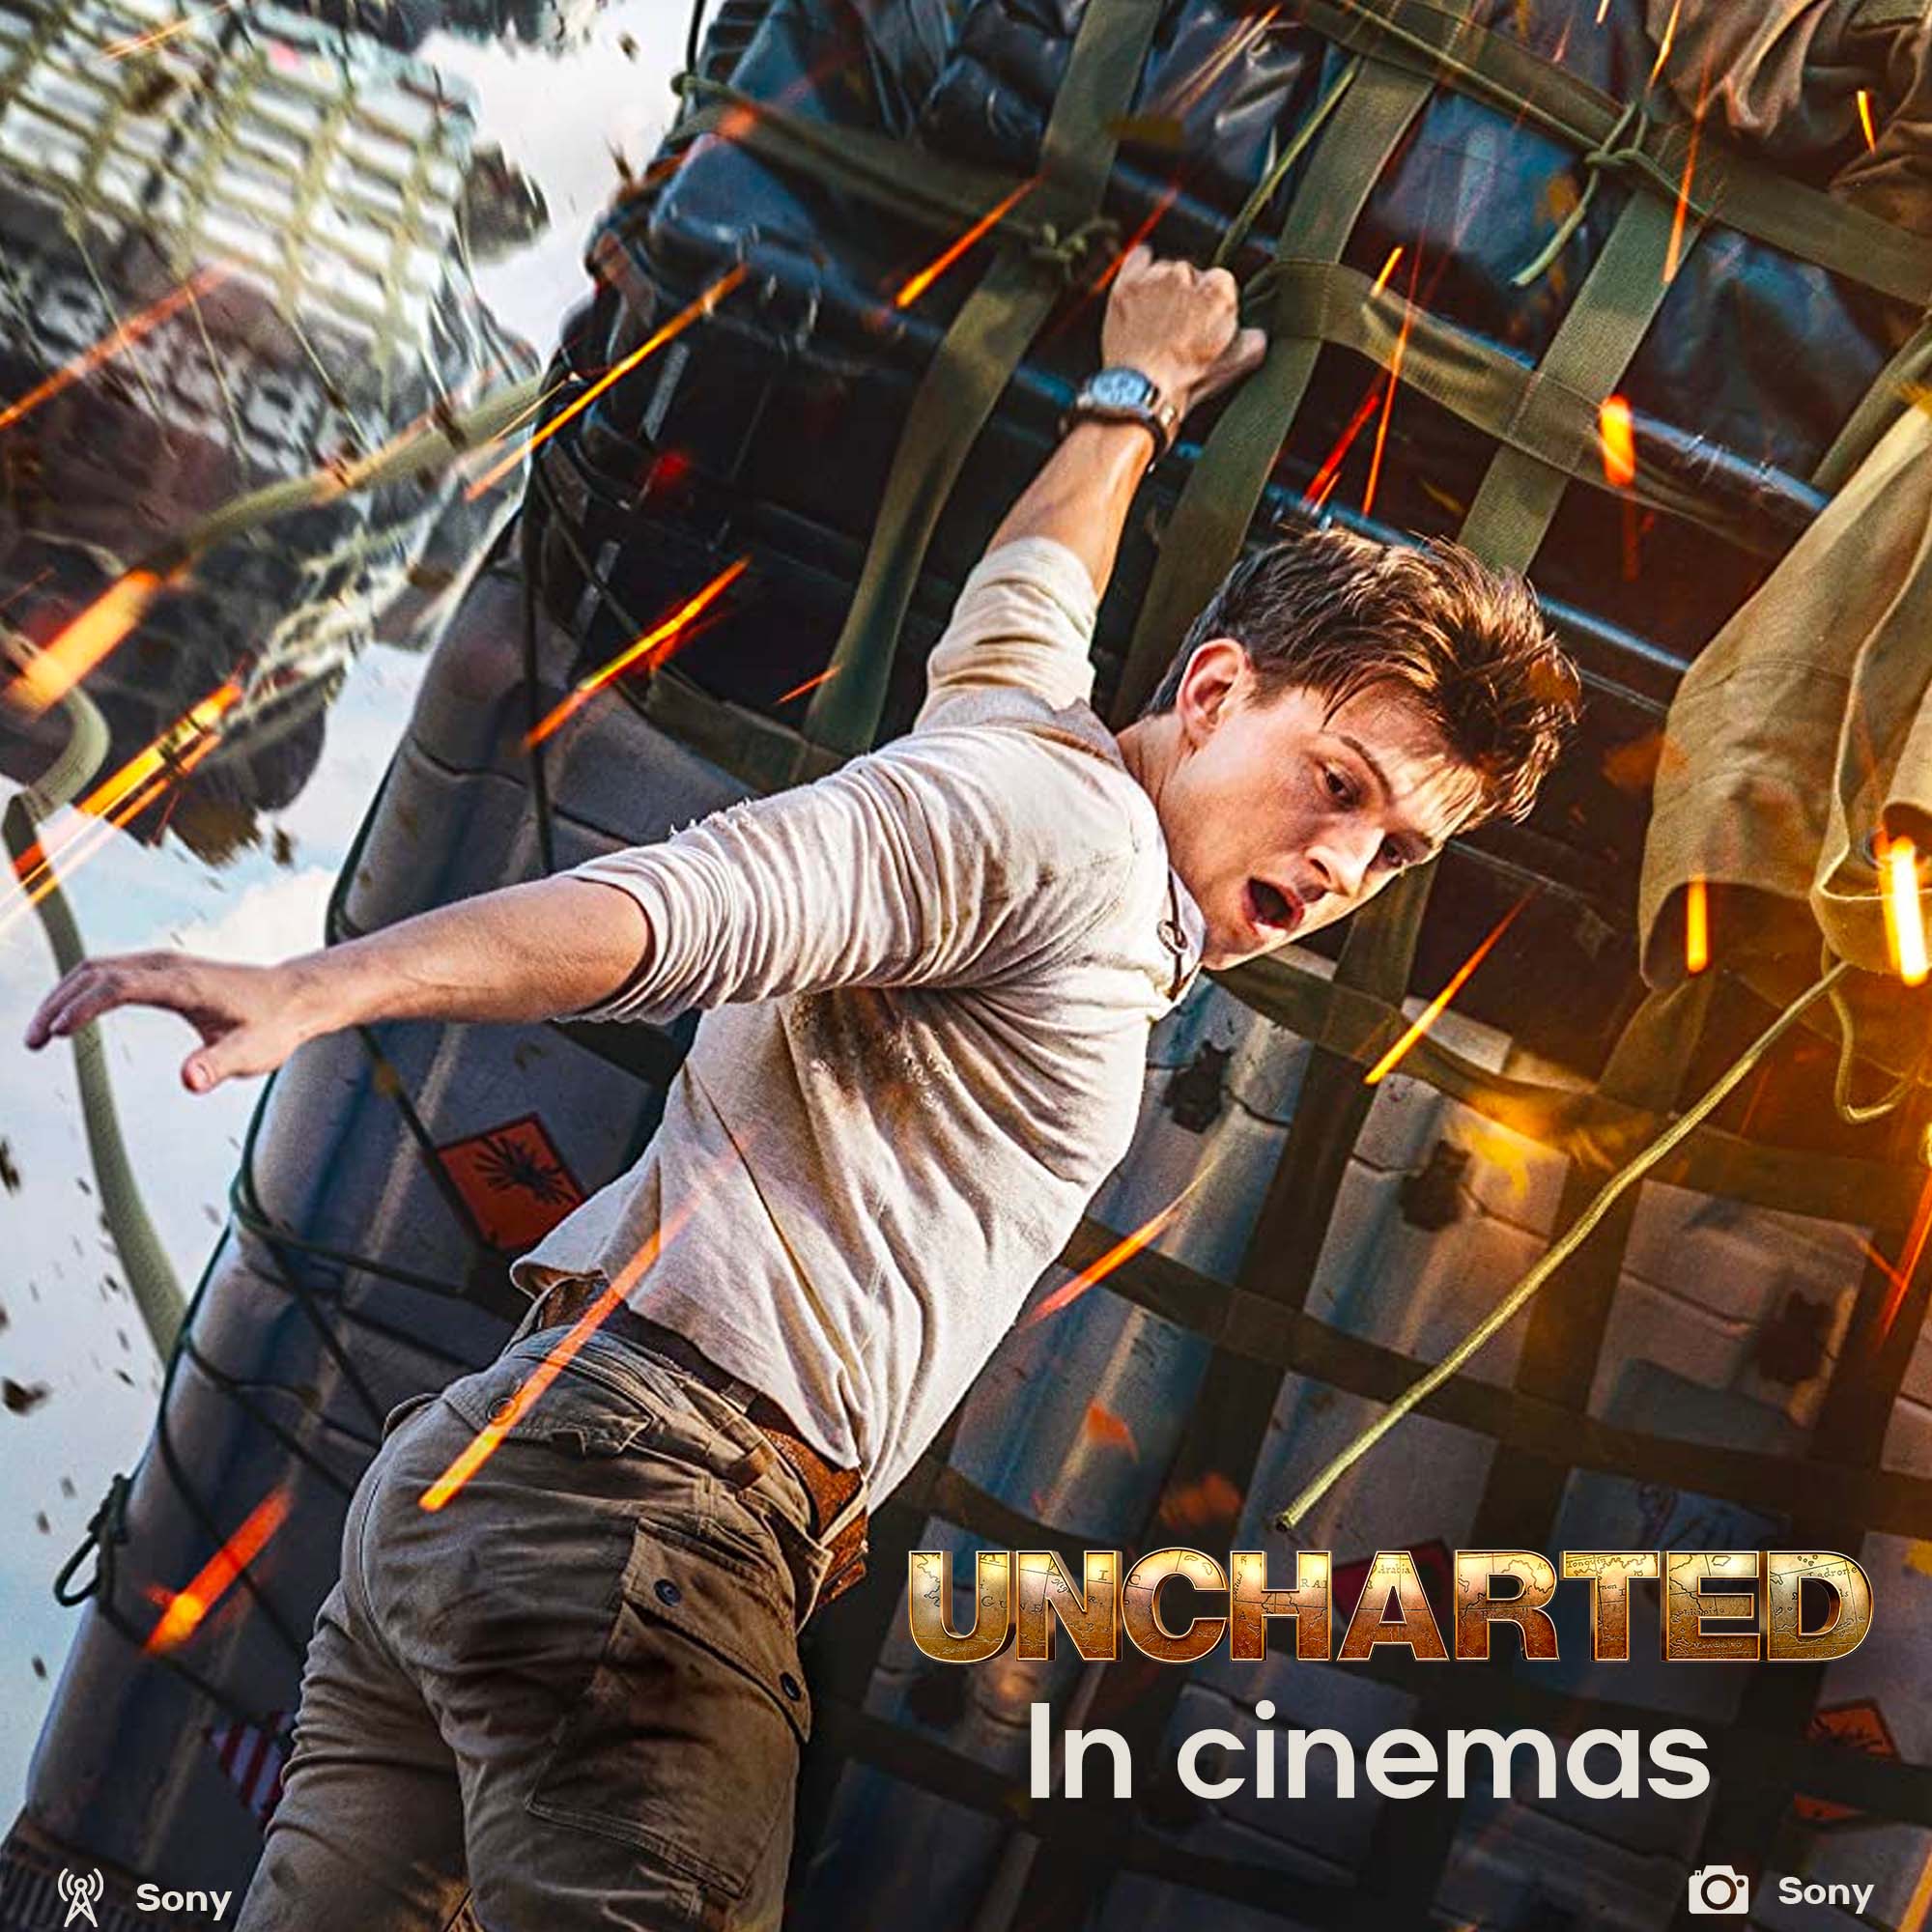 Uncharted movie in cinemas